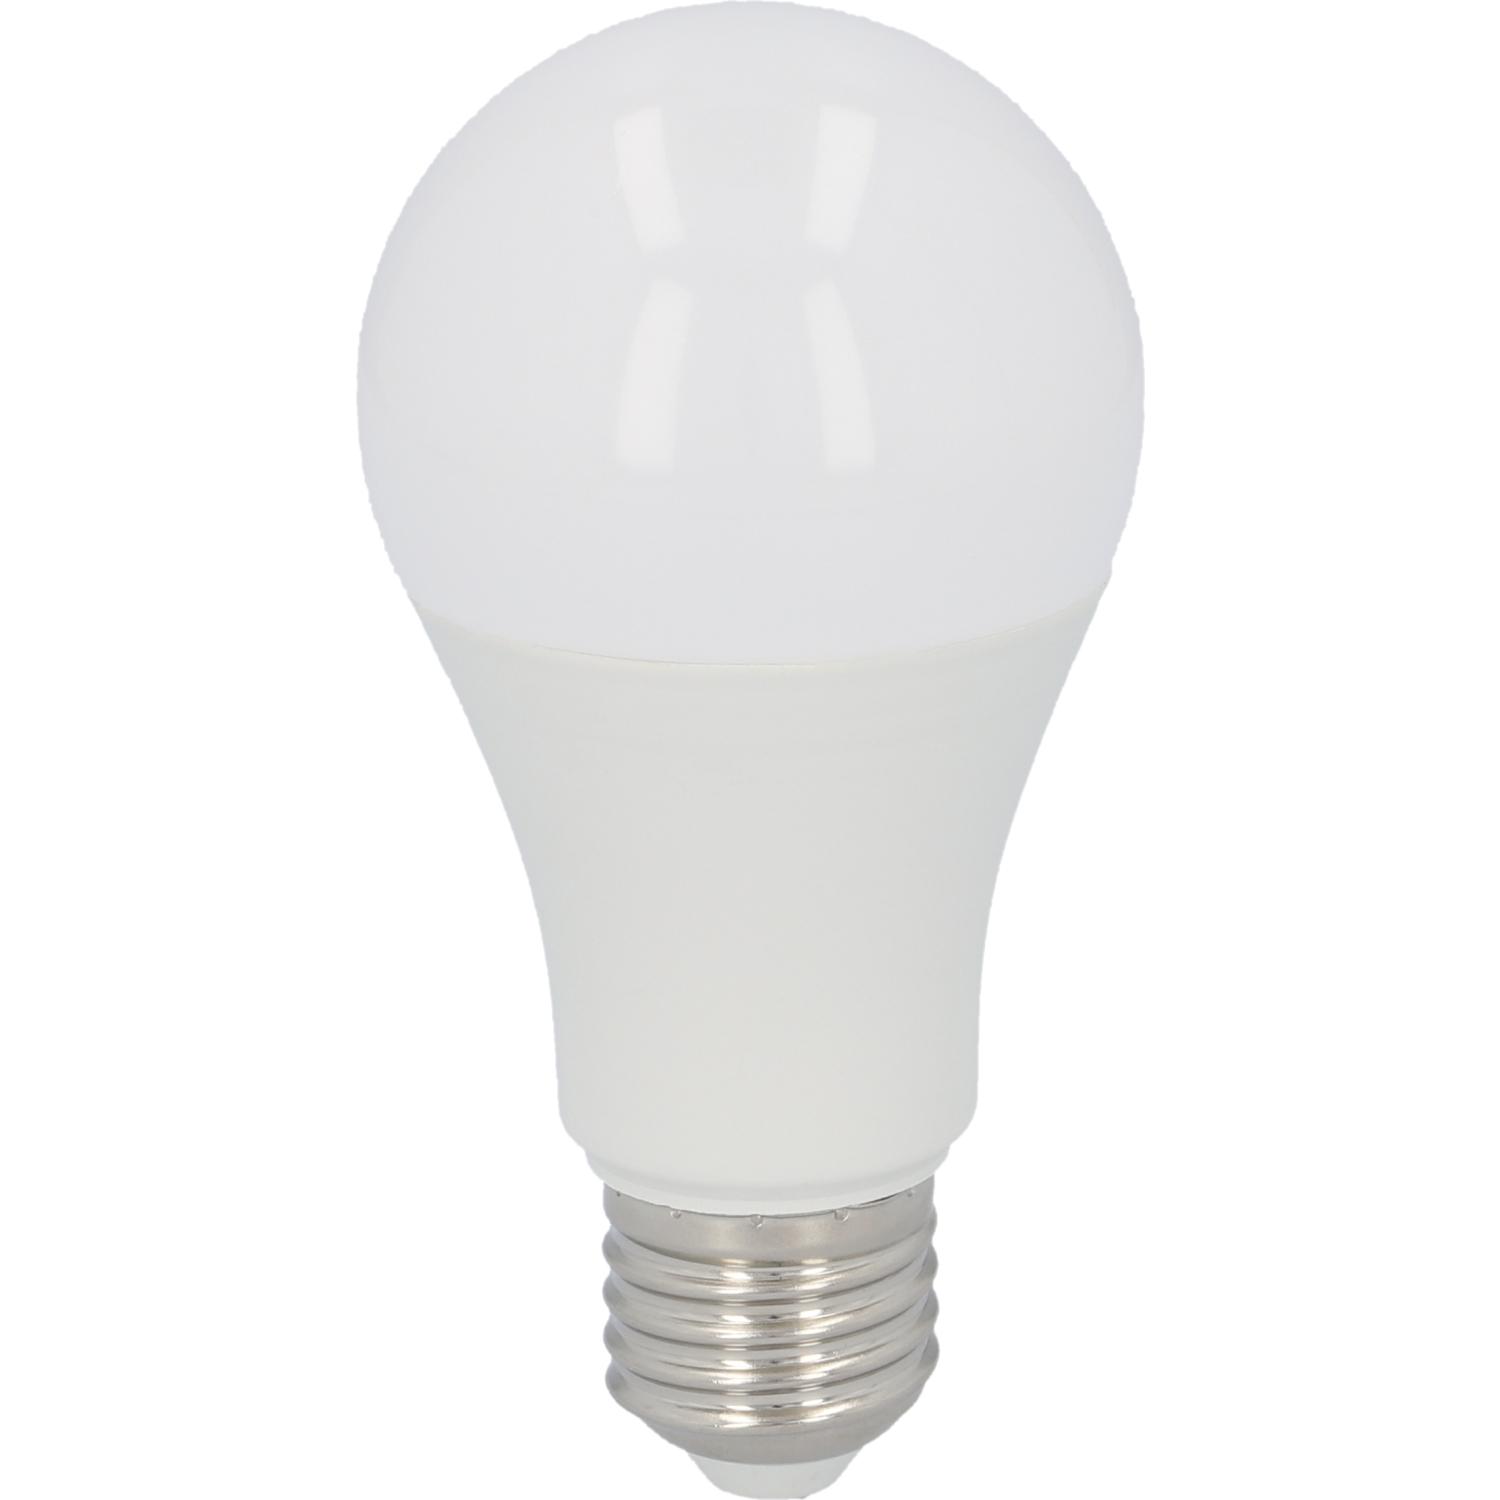 UNITEC WIFI LED Lampe, E27, dimmbar, RGB Farbwechsel, 10 Watt, entspricht 60 Watt